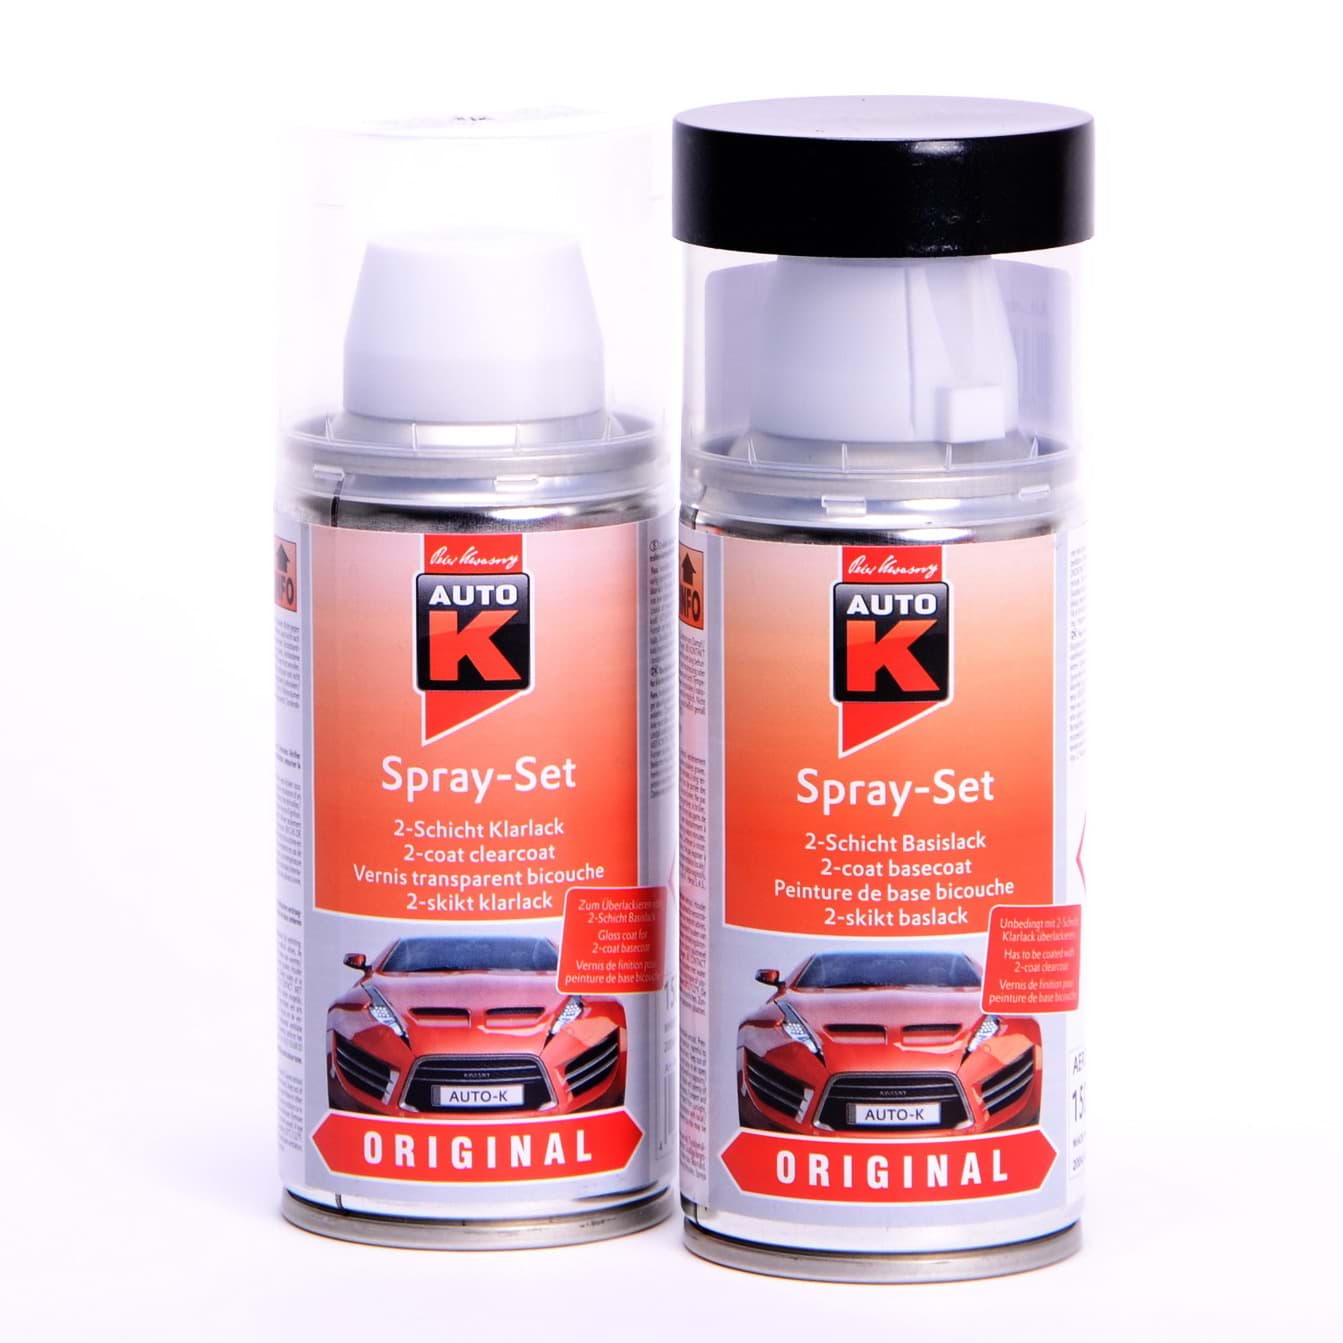 Auto-K Spray-Set Autolack für Mercedes 755 Tenoritgrau met 23343 resmi